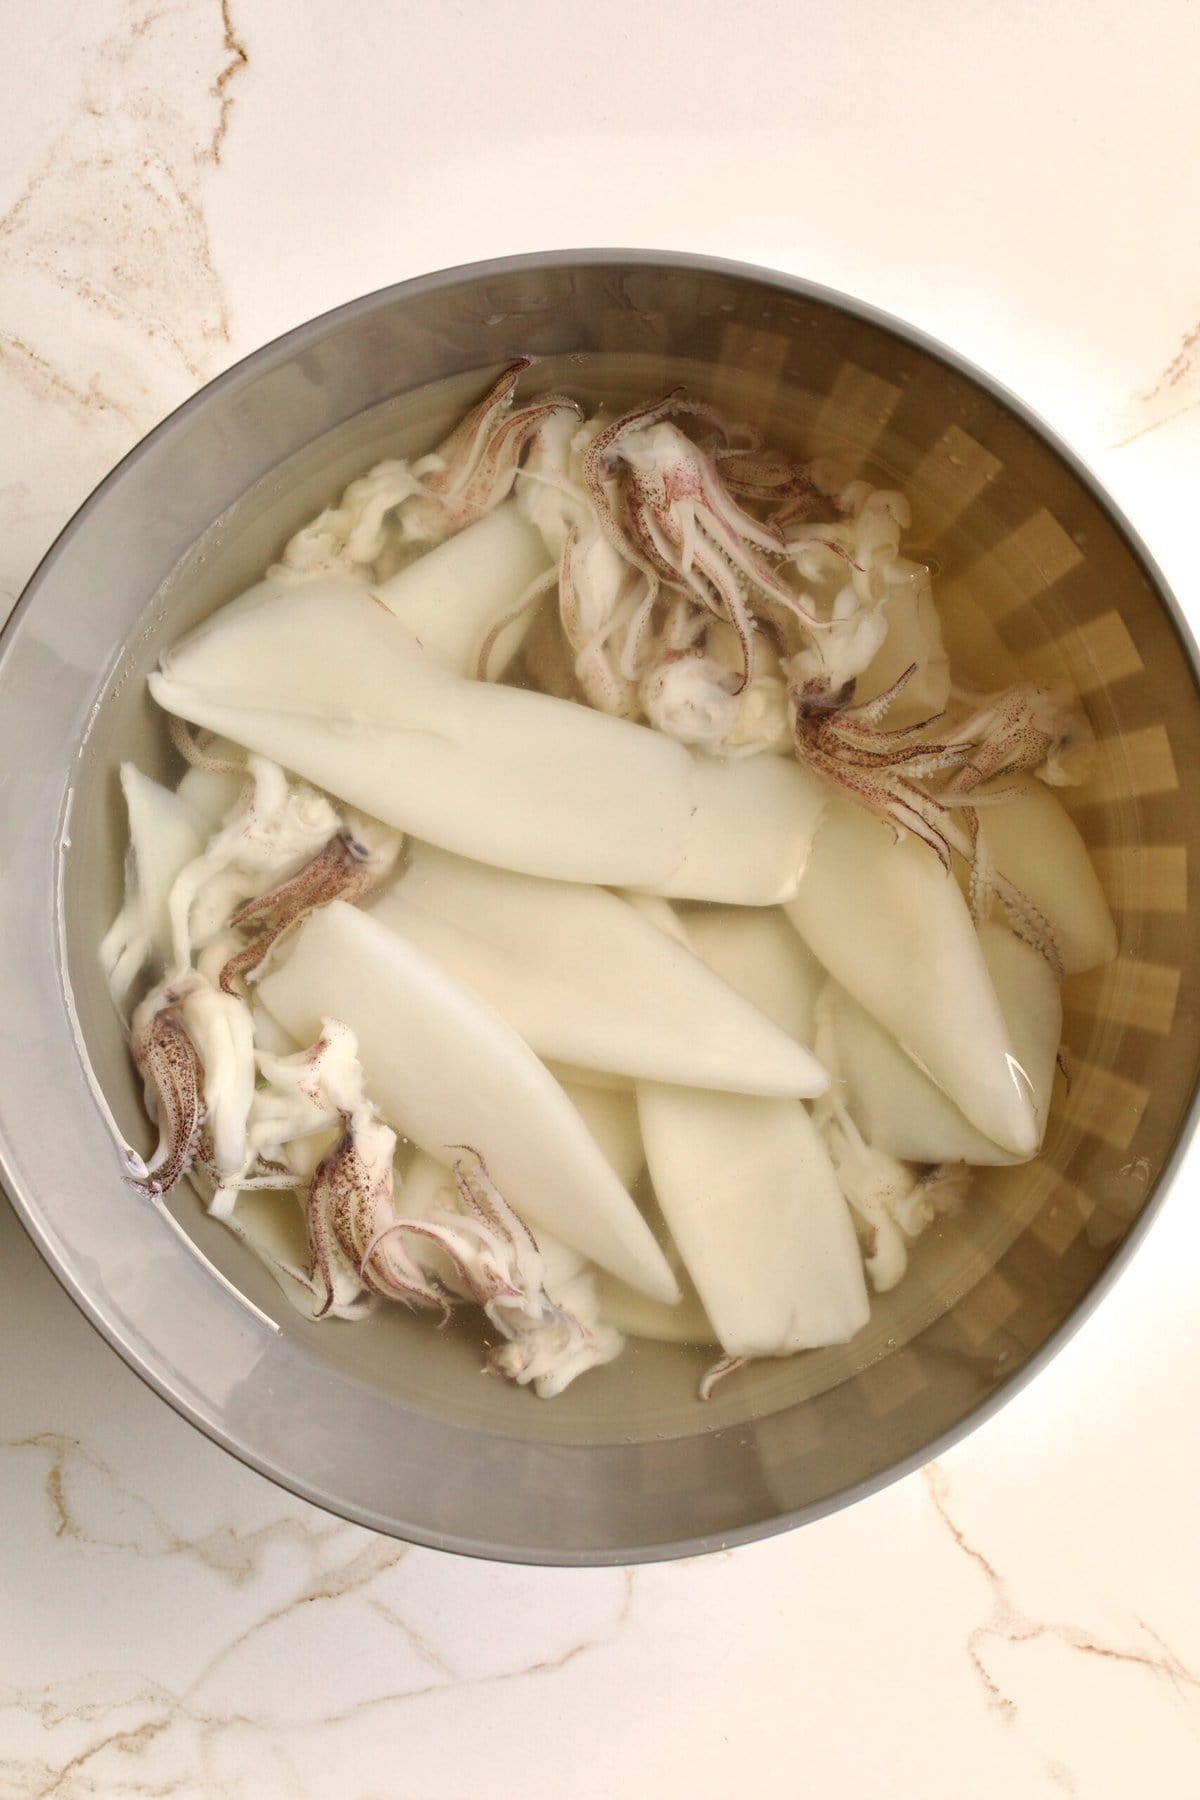 process of making Italian Stuffed Calamari Recipe in Tomato Sauce: washing calamari in water and drying them.